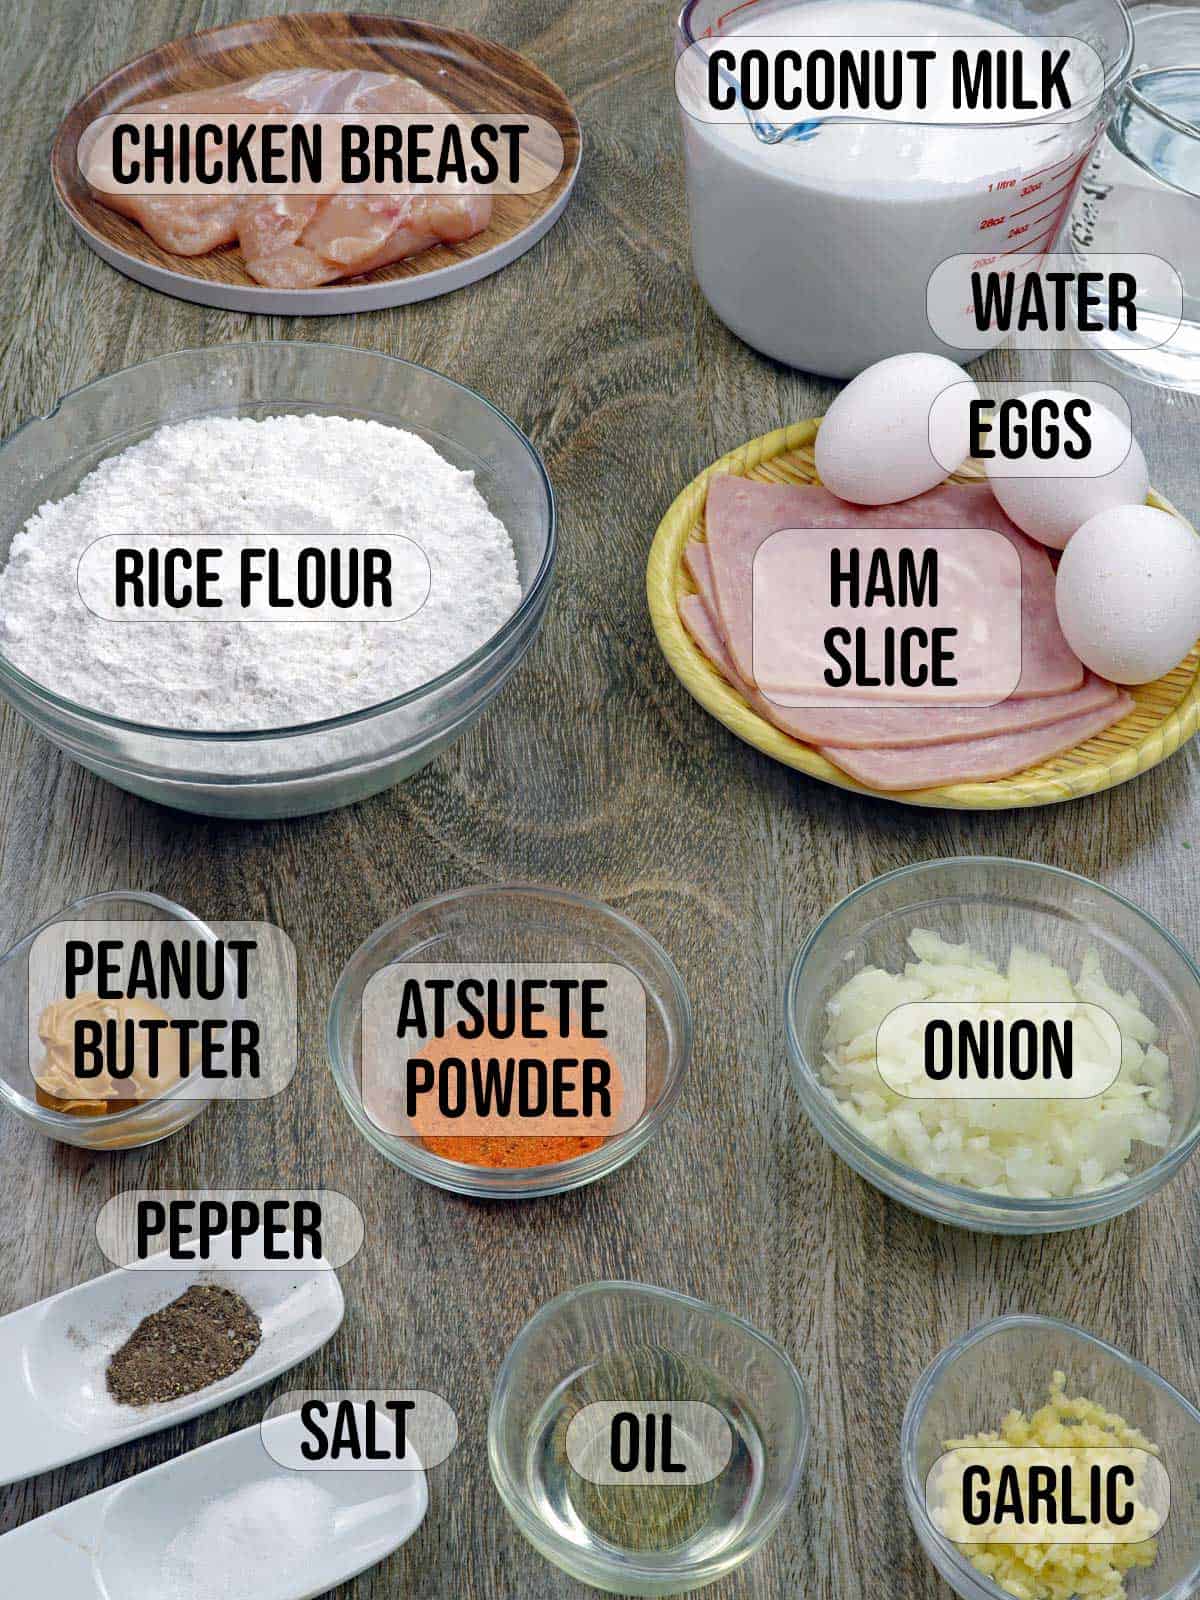 eggs, ham, rice flour, peanut butter, atsuete powder, oil, garlic, onions, salt, pepper, chicken, coconut milk in bowls.